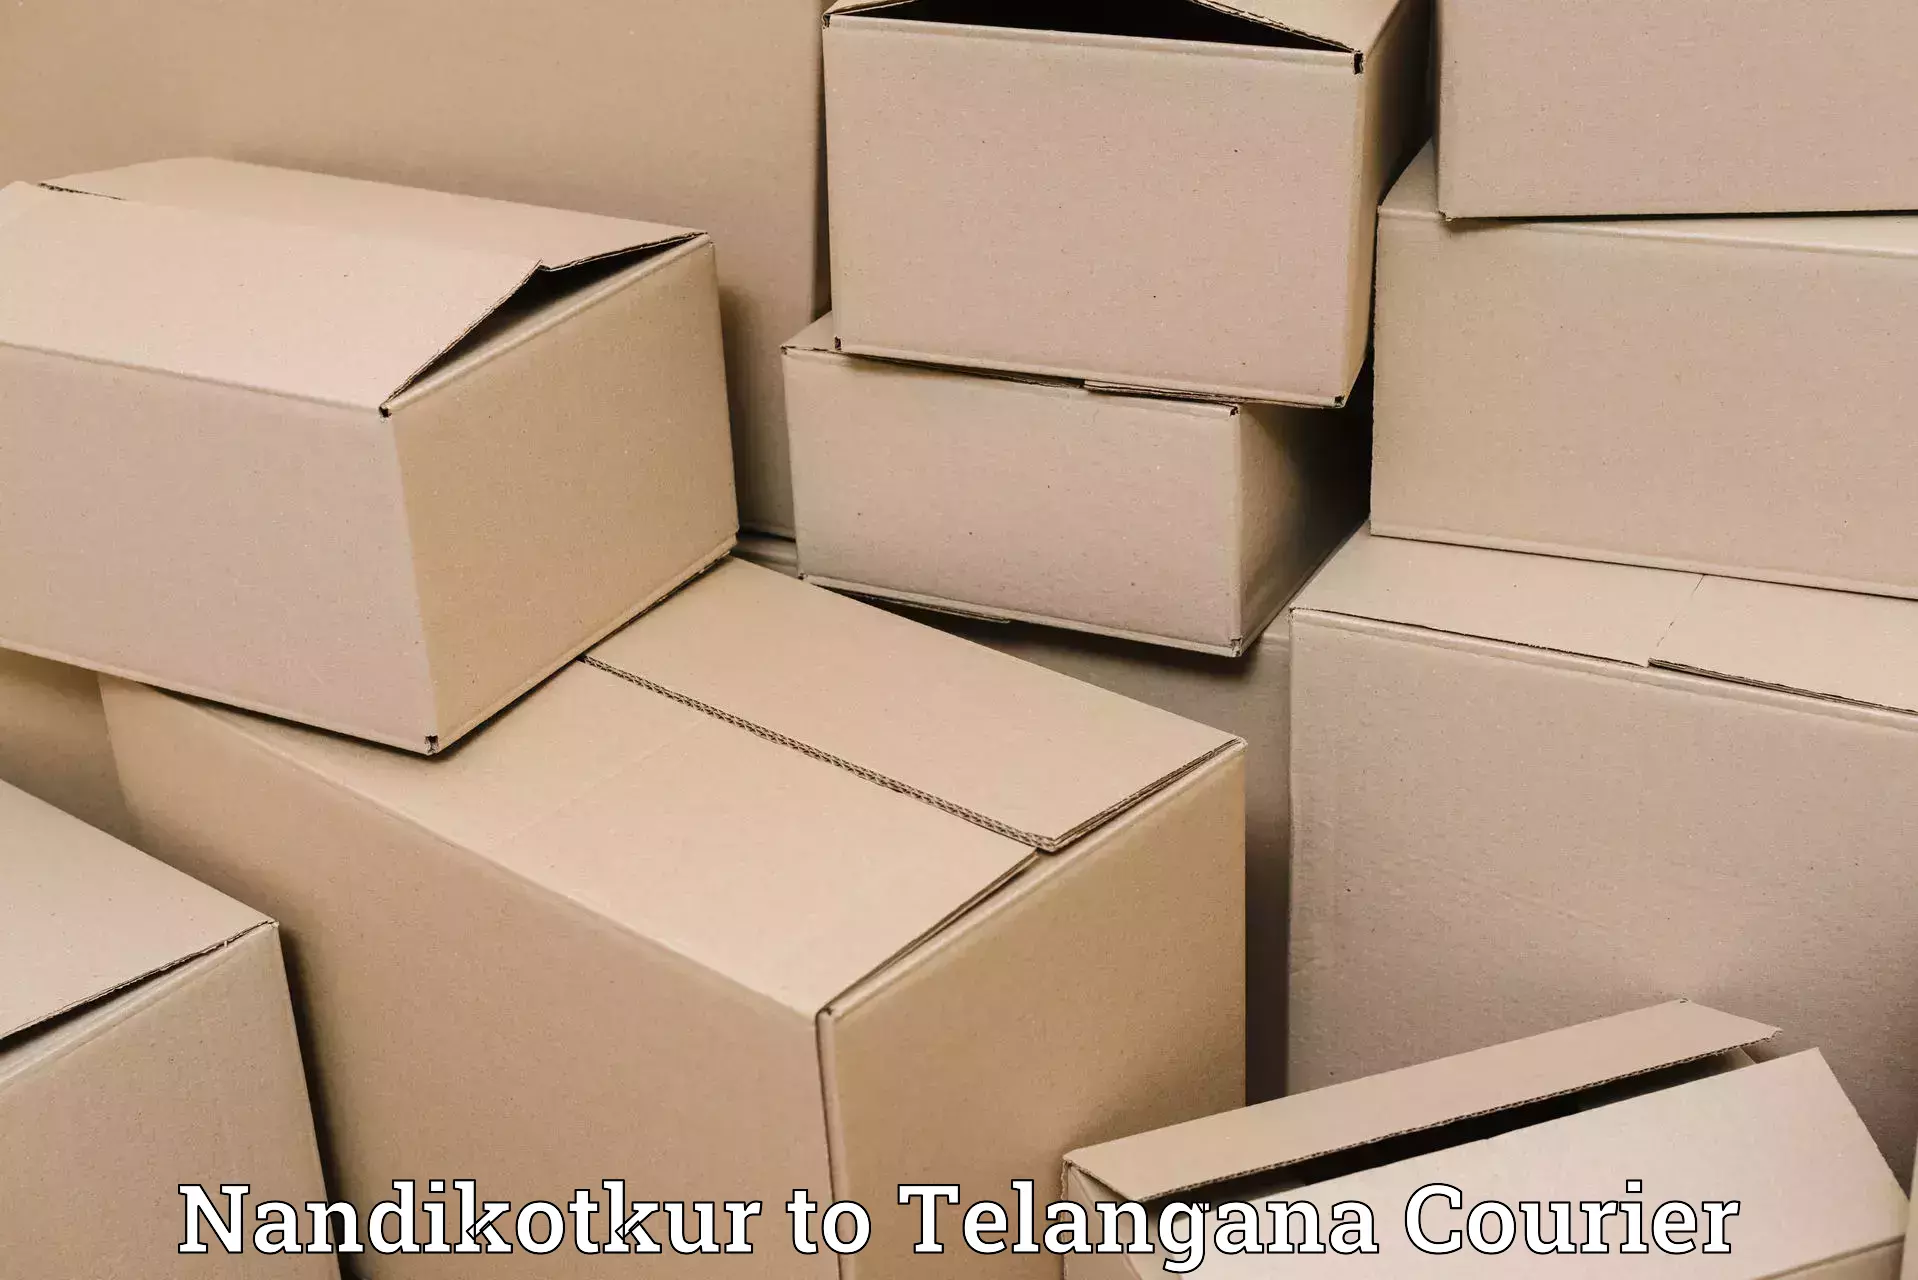 High-speed parcel service Nandikotkur to Karimnagar